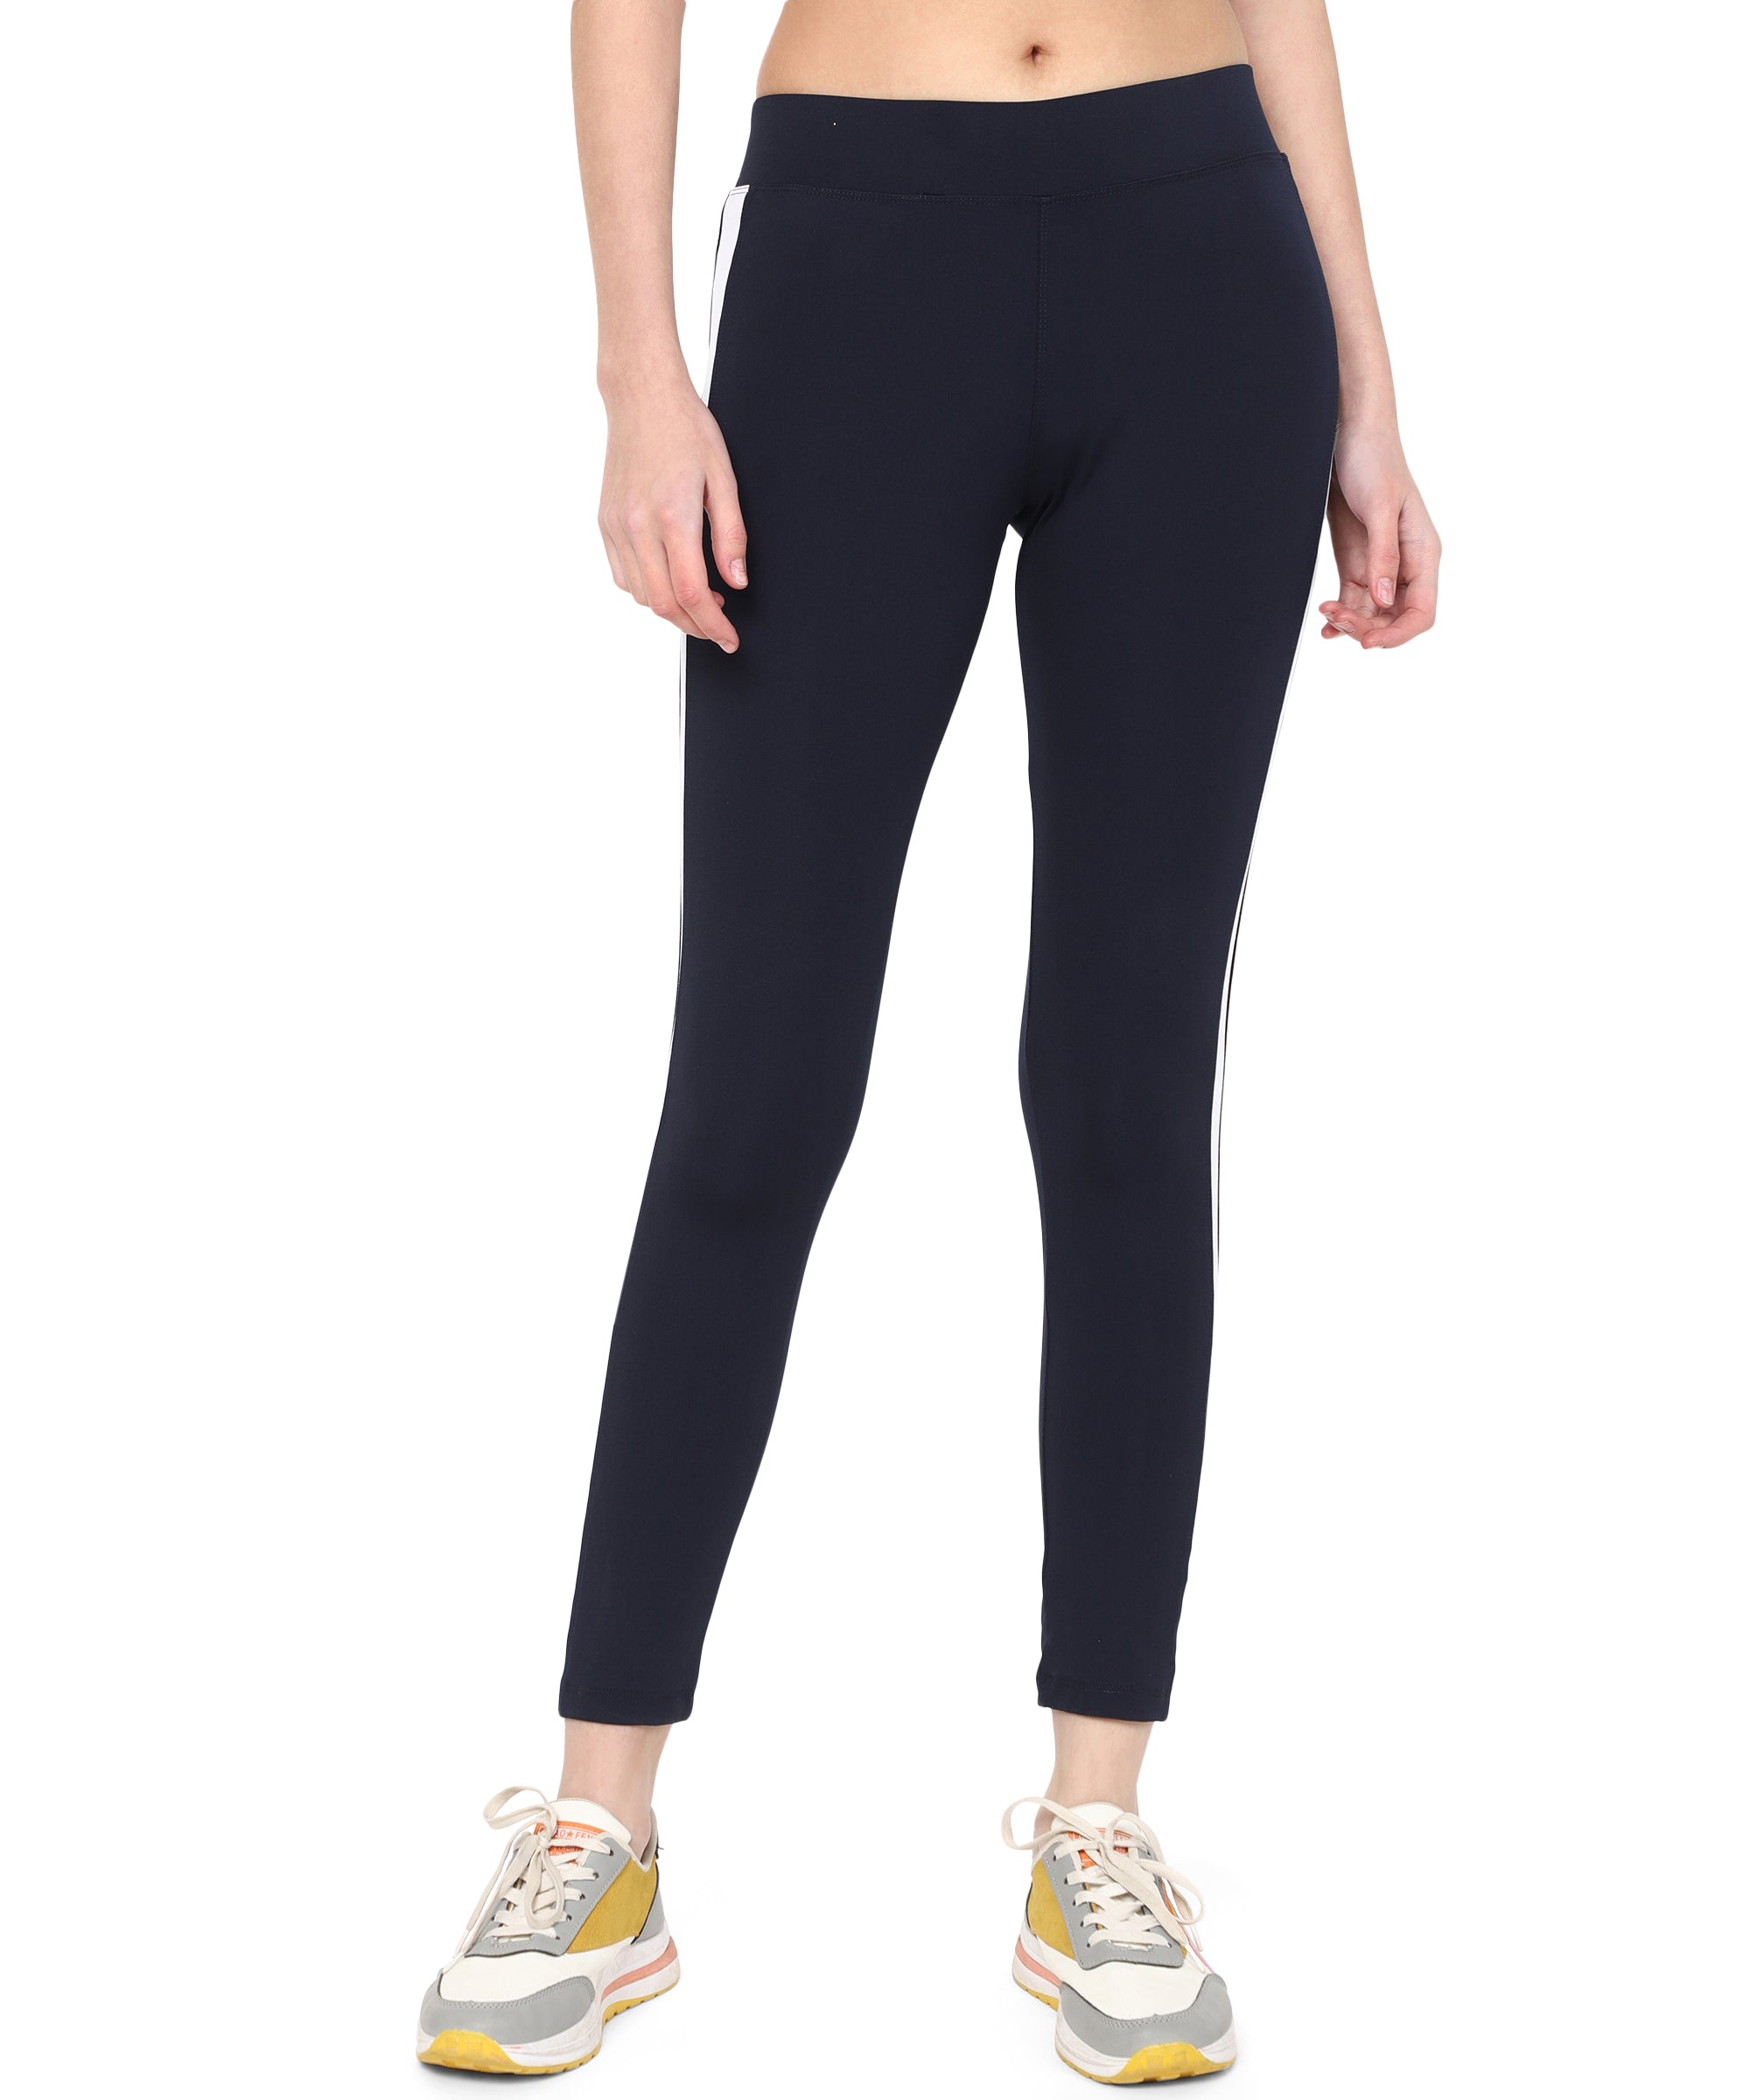 Rag & Bone 27 Magnolia legging jeans | Jean leggings, Clothes design,  Fashion